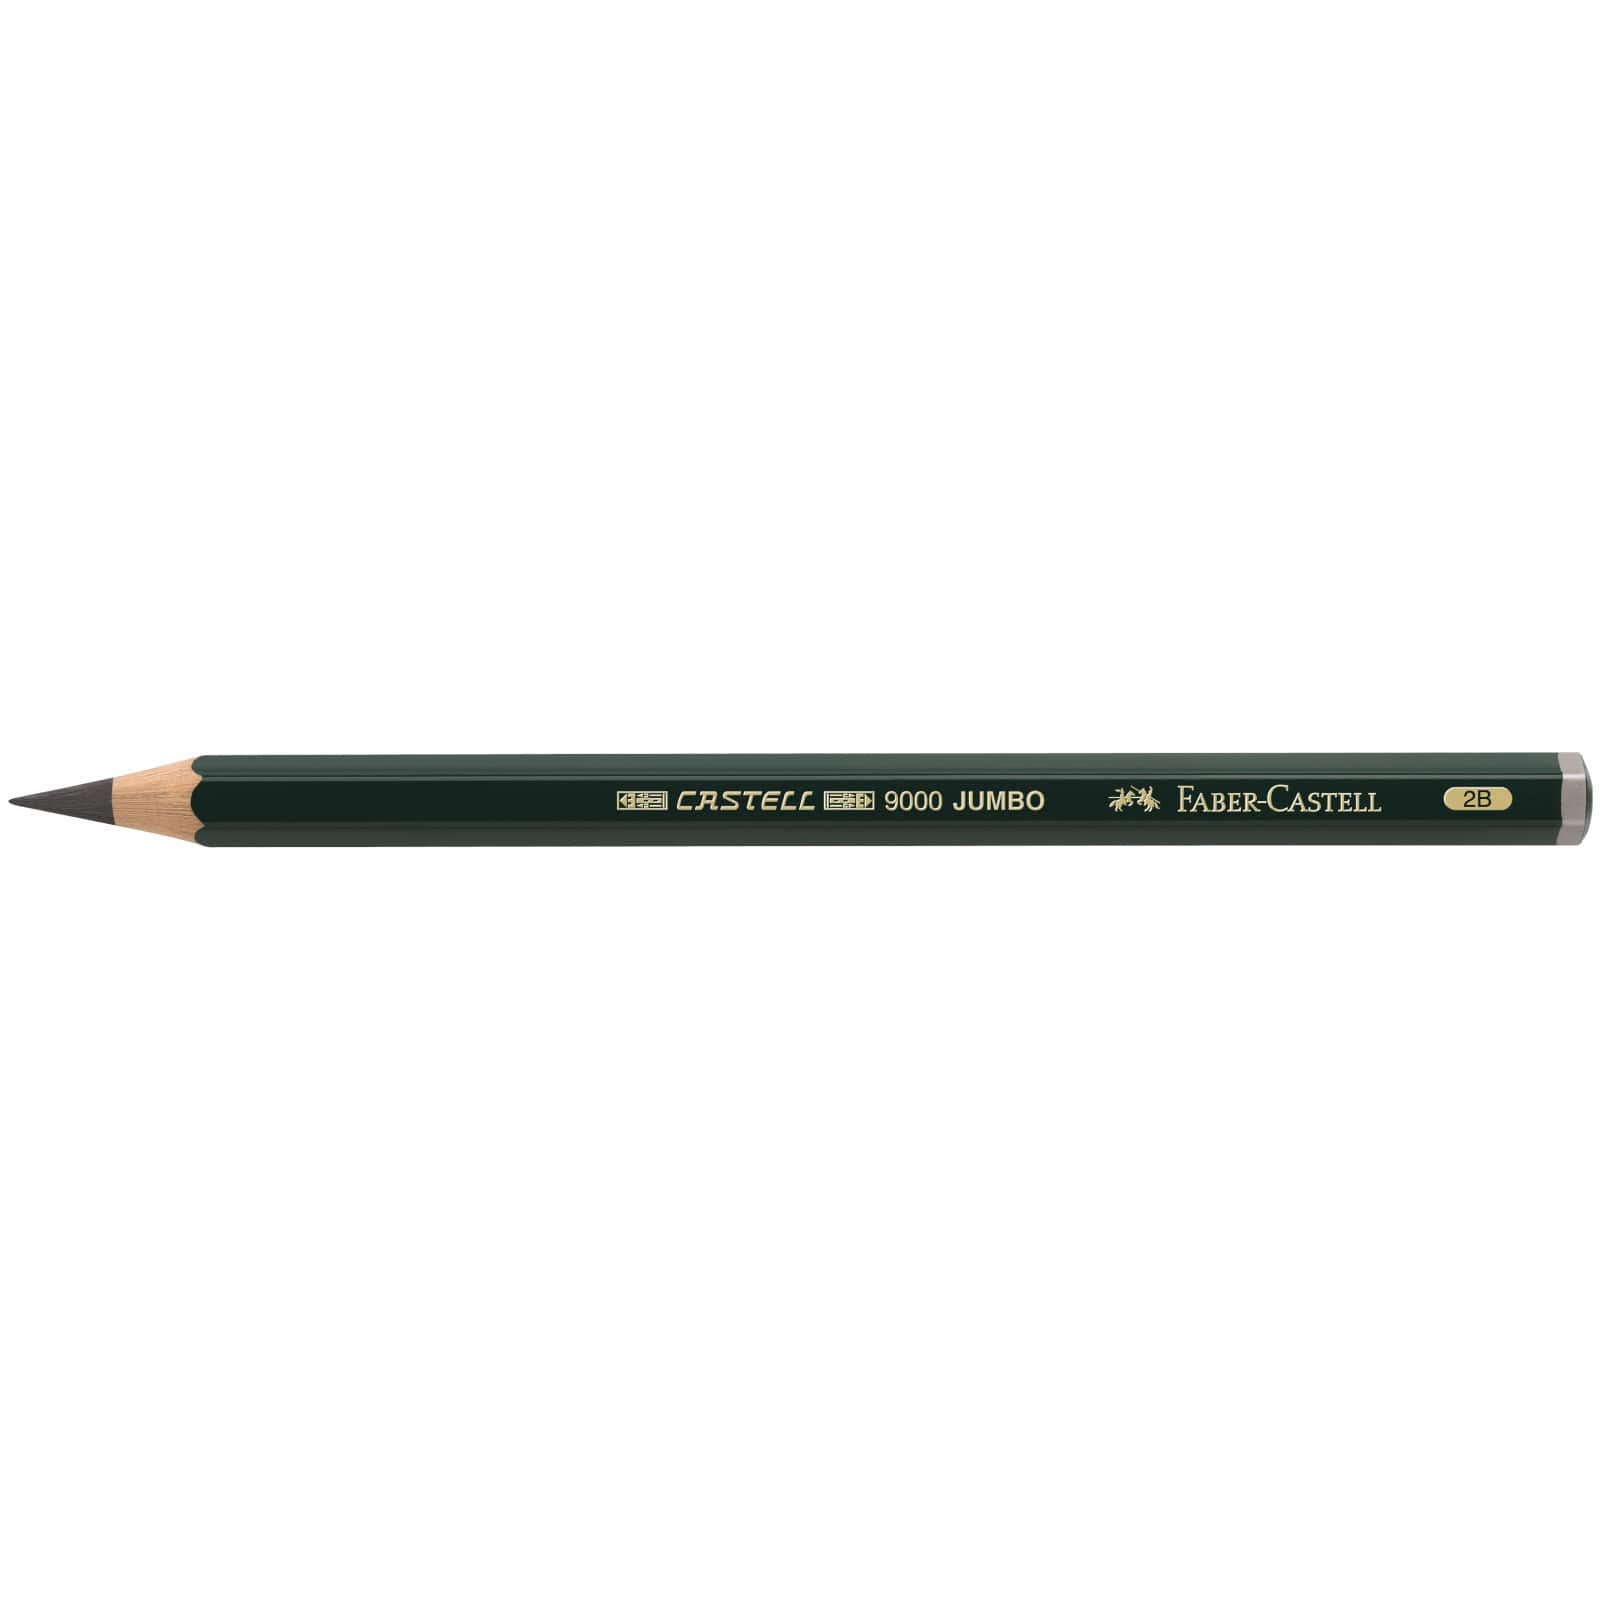 6 Pack: Faber-Castell 9000 Jumbo Graphite Pencil Sketch Set